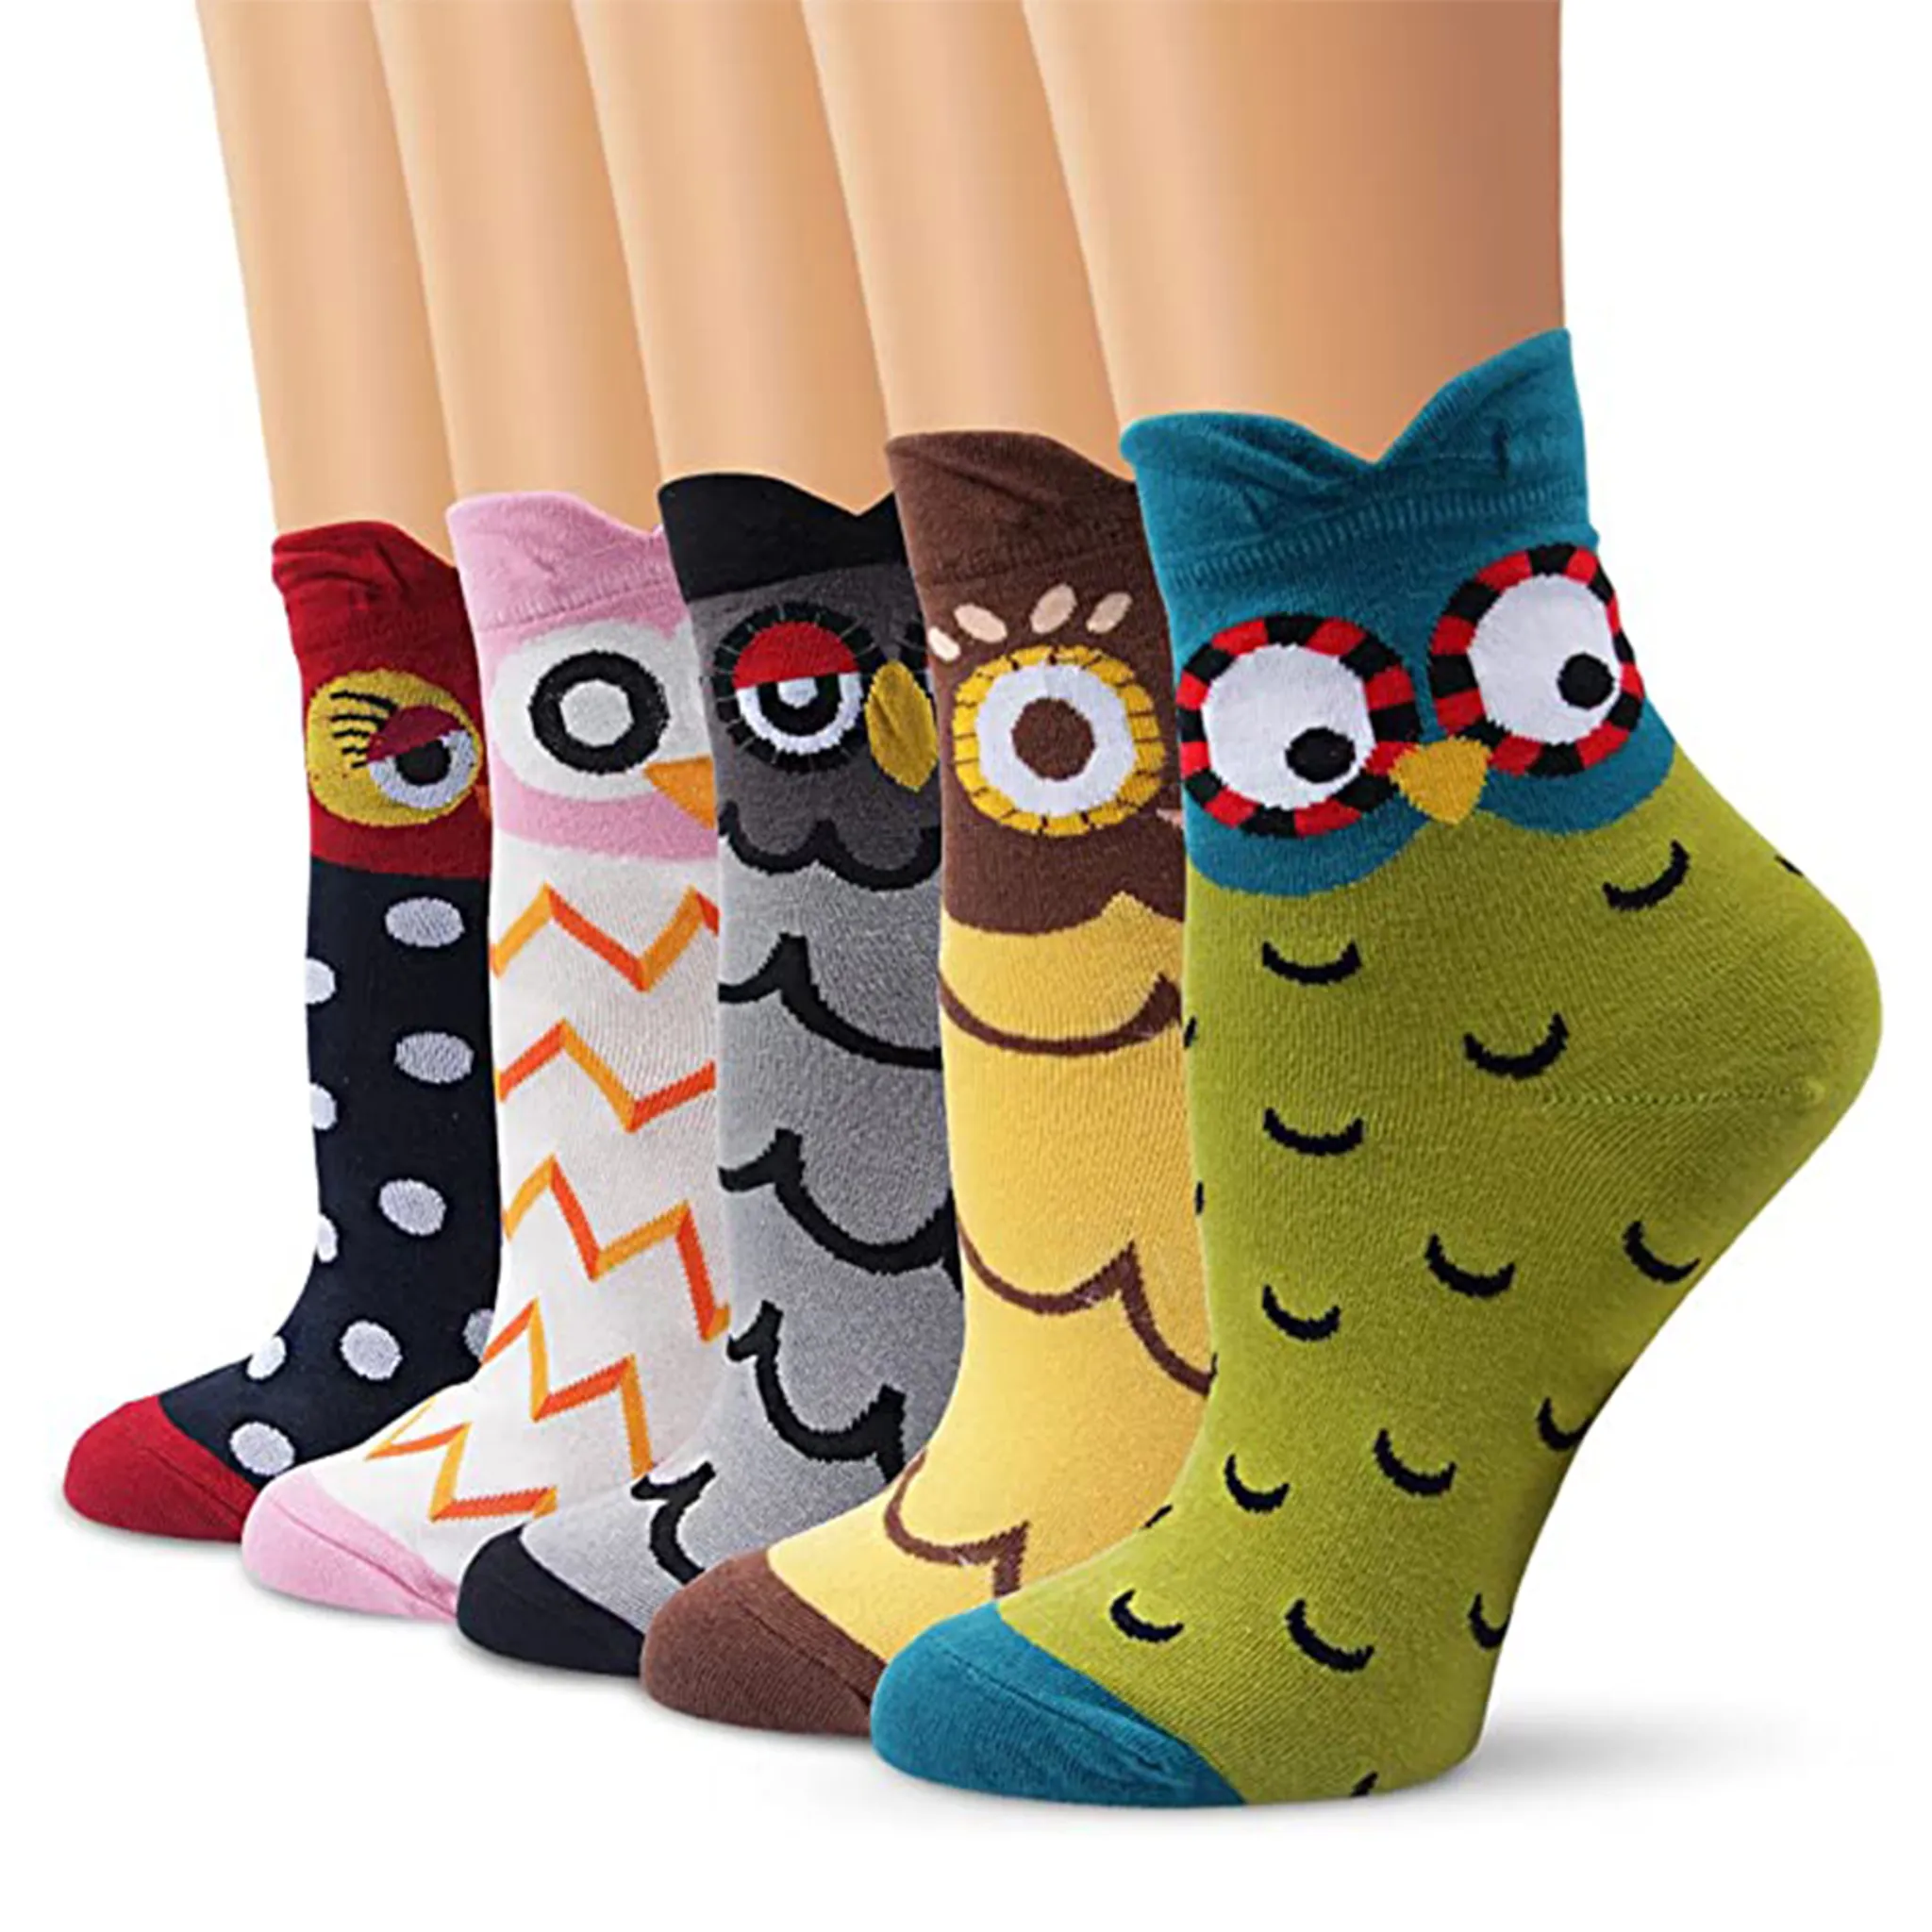 Zehen Damen 5 Lustige Paare Socken mit